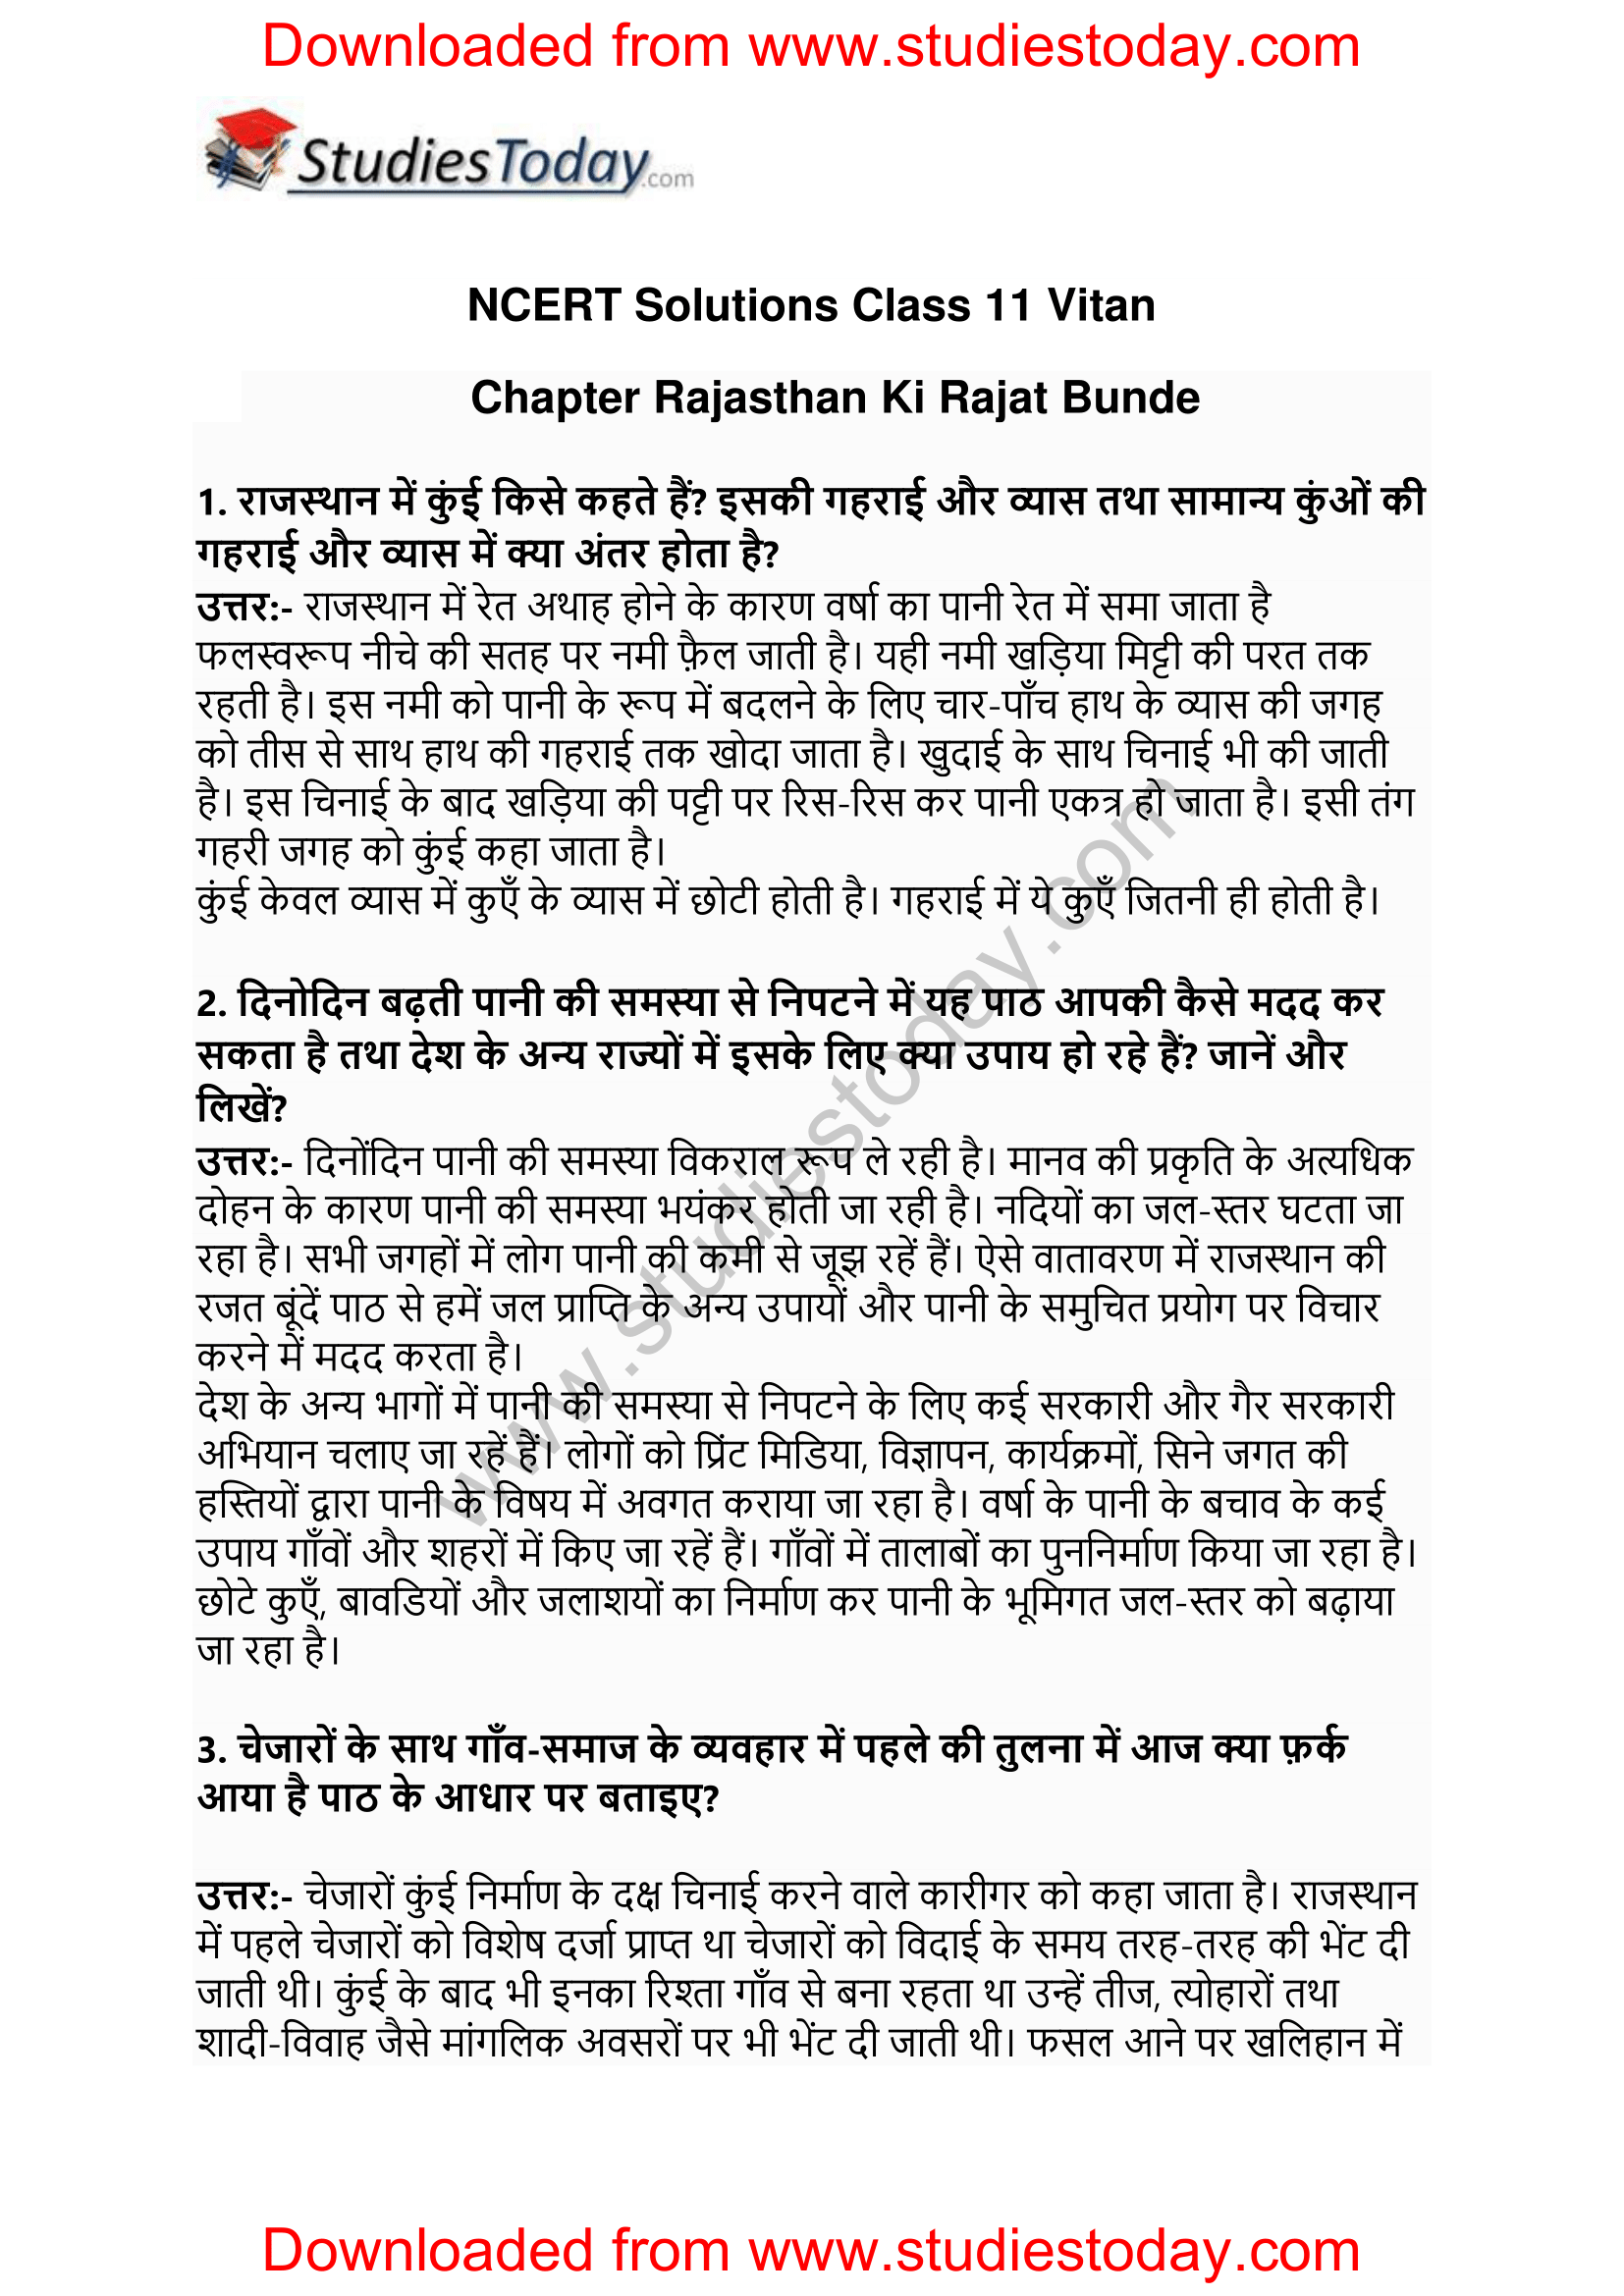 NCERT-Solutions-Class-11-Hindi-Vitan-Rajasthan-Ki-Rajat-Bunde-1